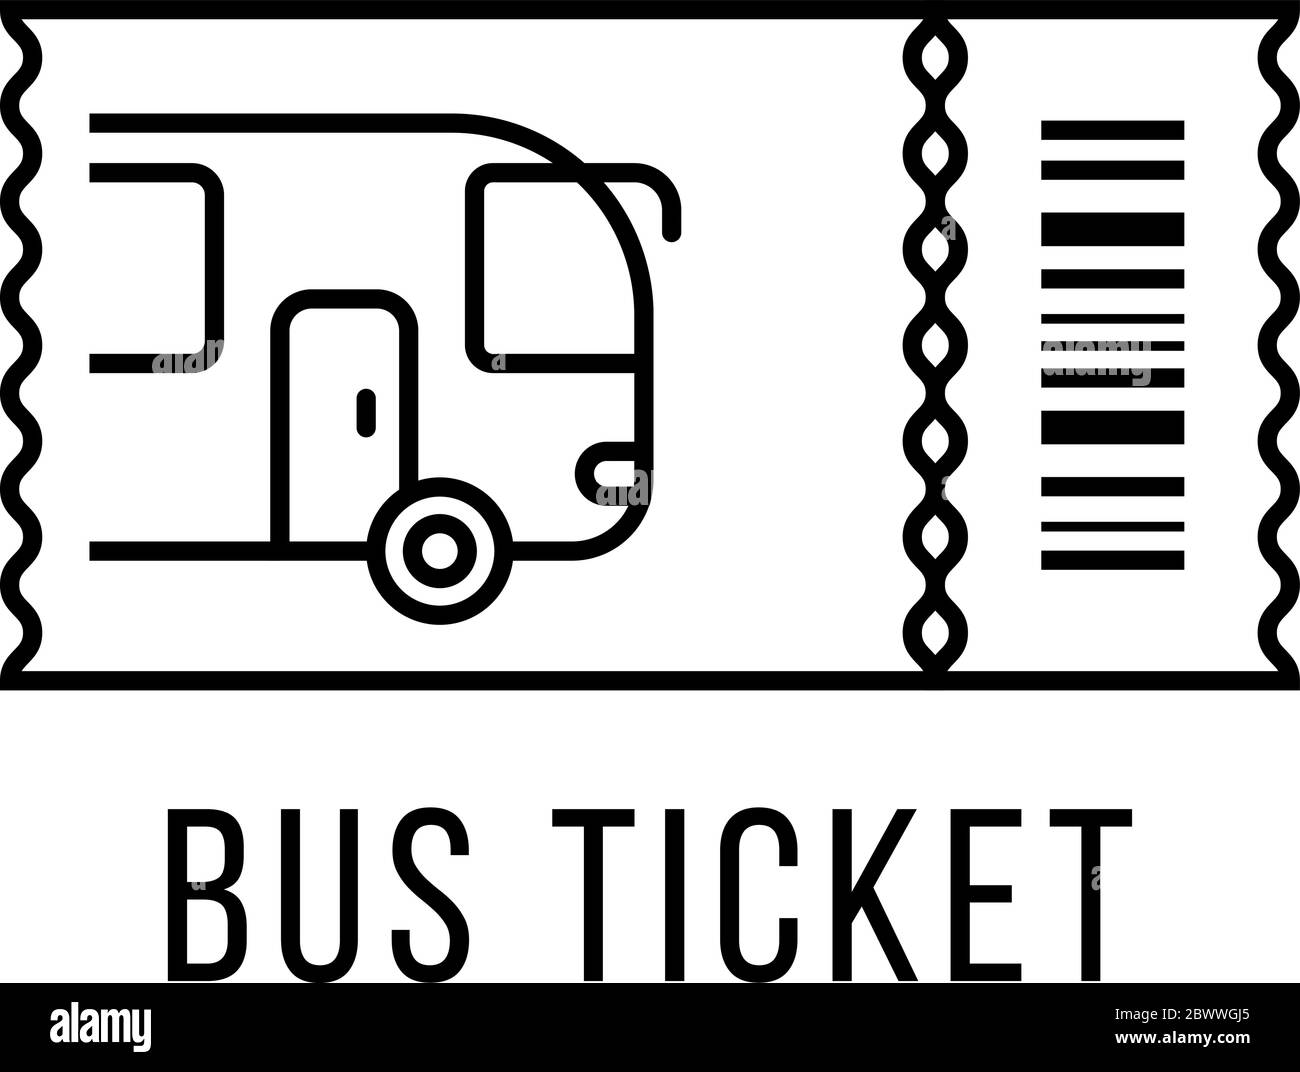 simple black thin line bus ticket logo Stock Vector